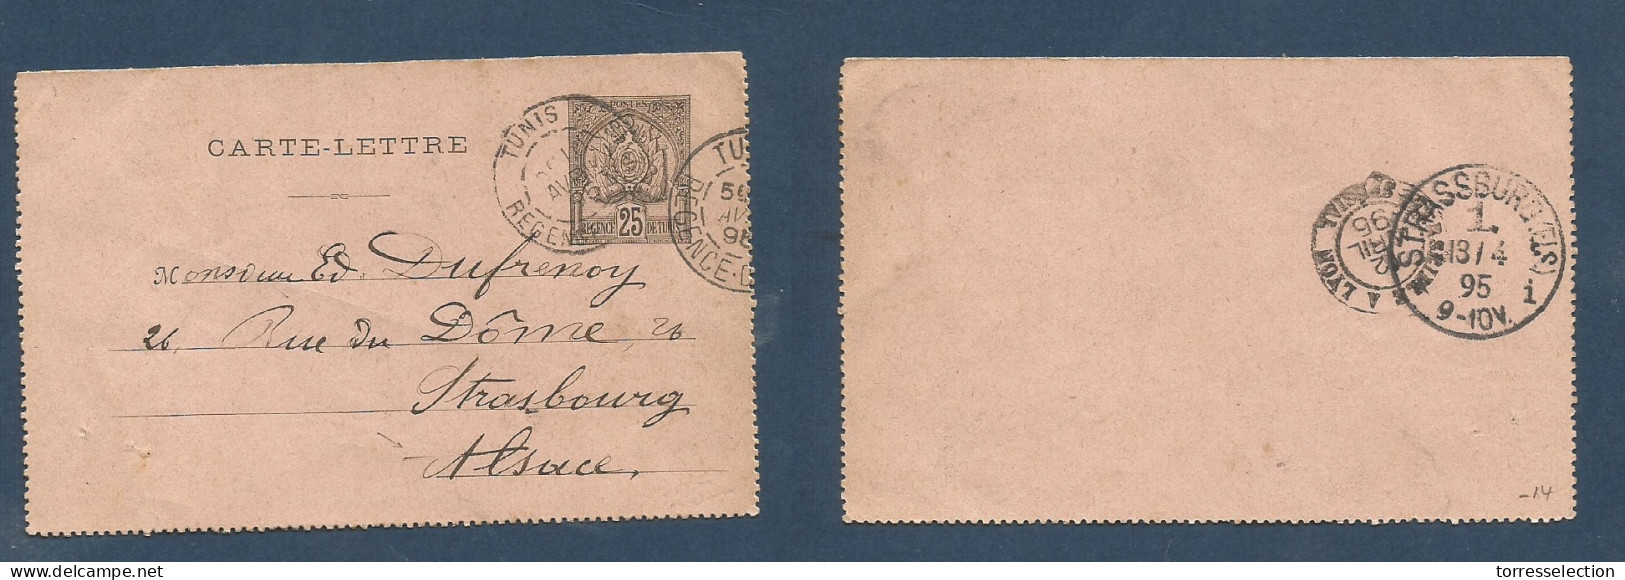 TUNISIA. 1895 (10 April) GPO - Alsace, Strassbourg (13 Apr) 25c Black Lettersheet. Fine Used. XSALE. - Tunisie (1956-...)